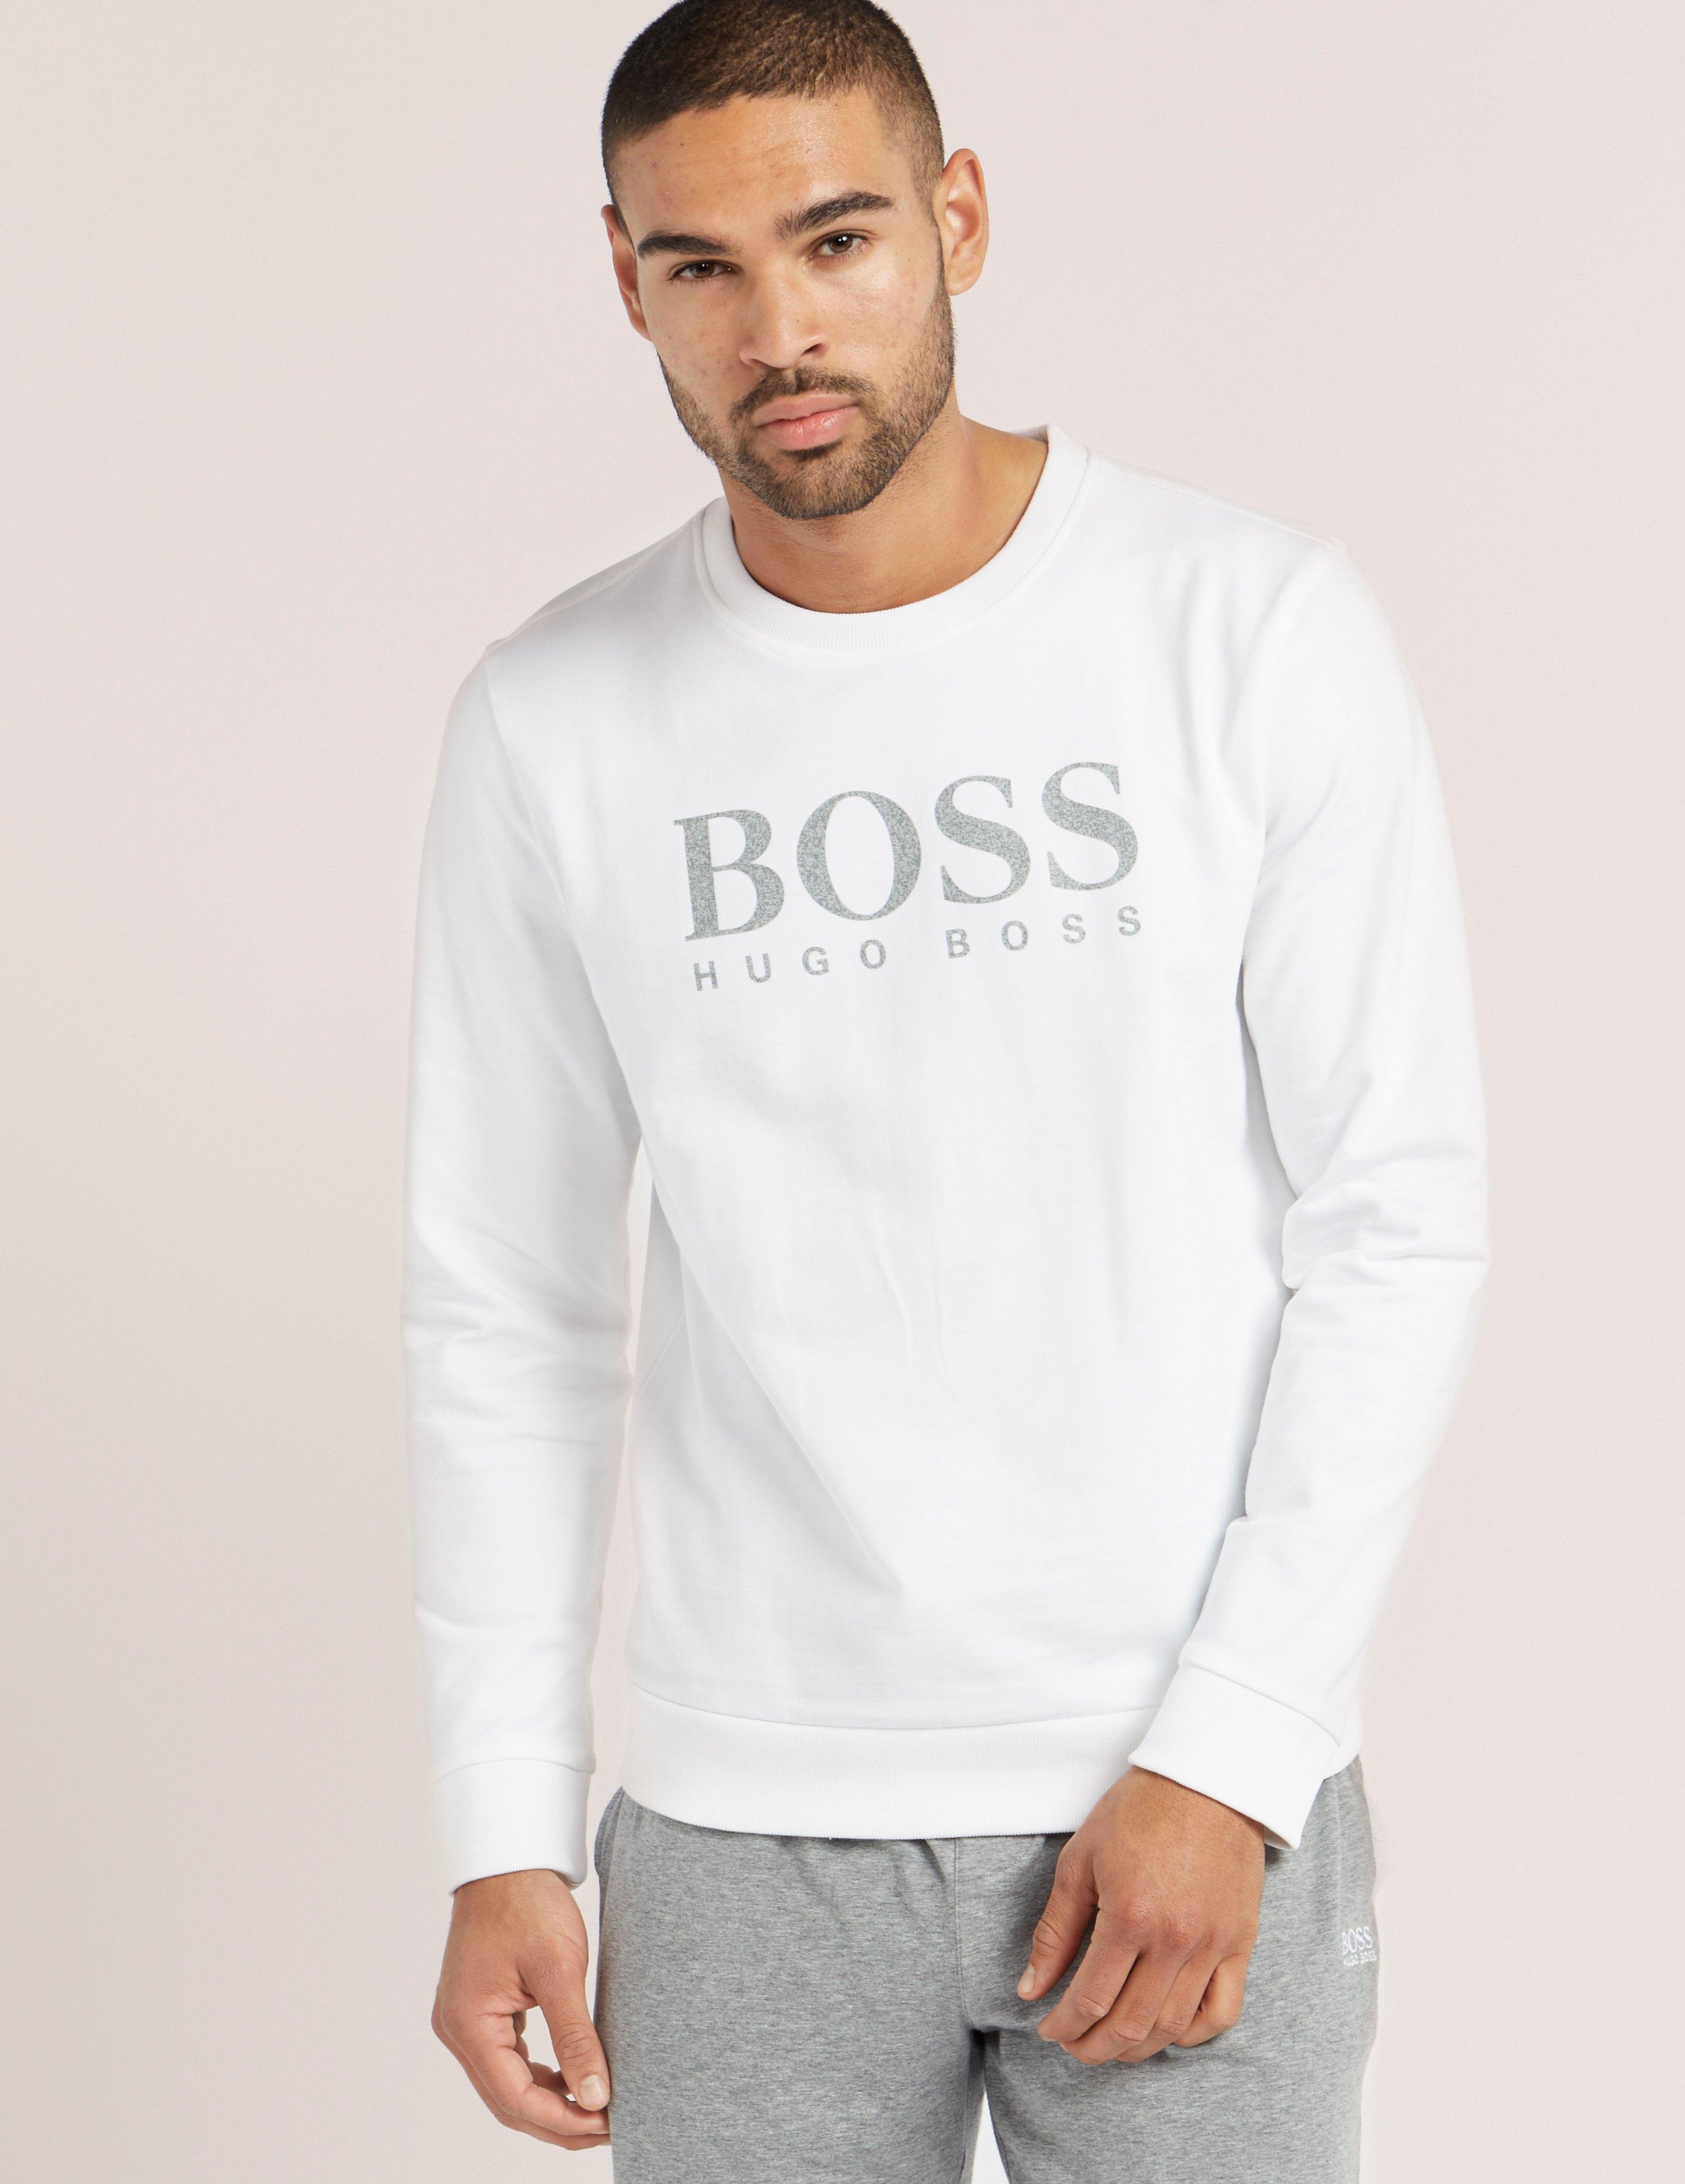 BOSS by Hugo Boss Cotton Heritage Logo Sweatshirt in White for Men - Lyst